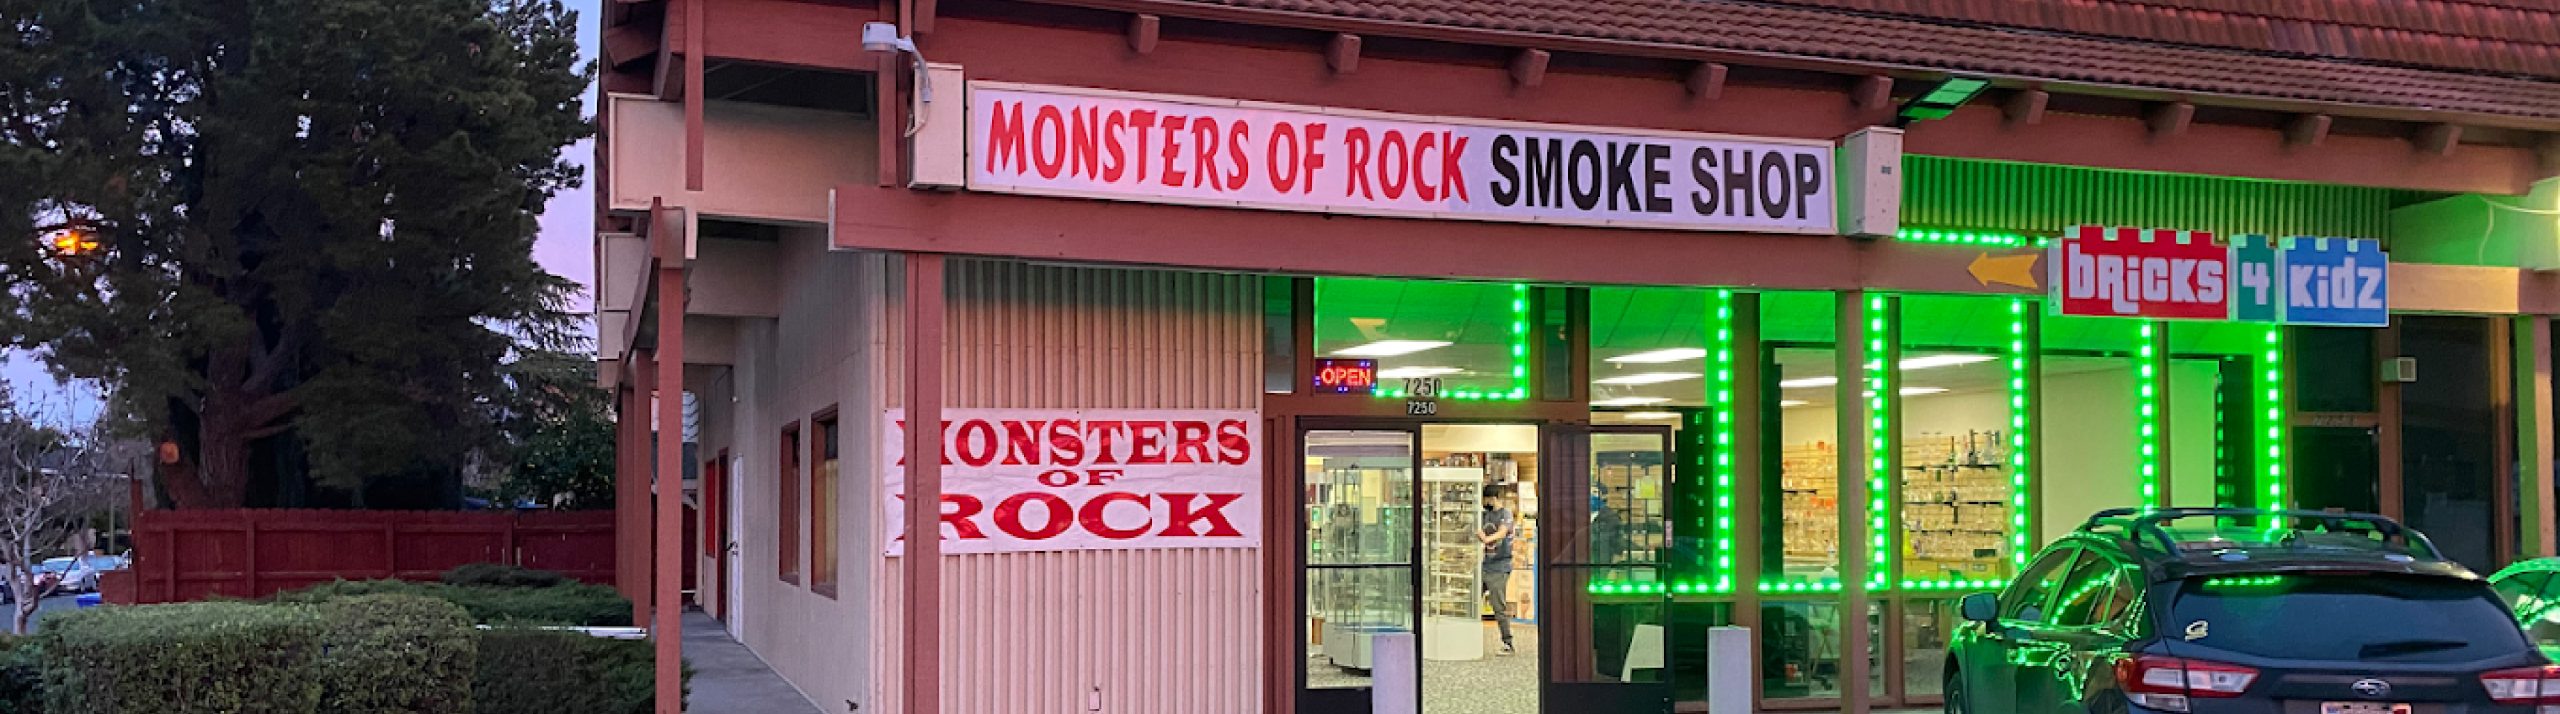 image of monsters of rock smoke shop in santa cruz ca